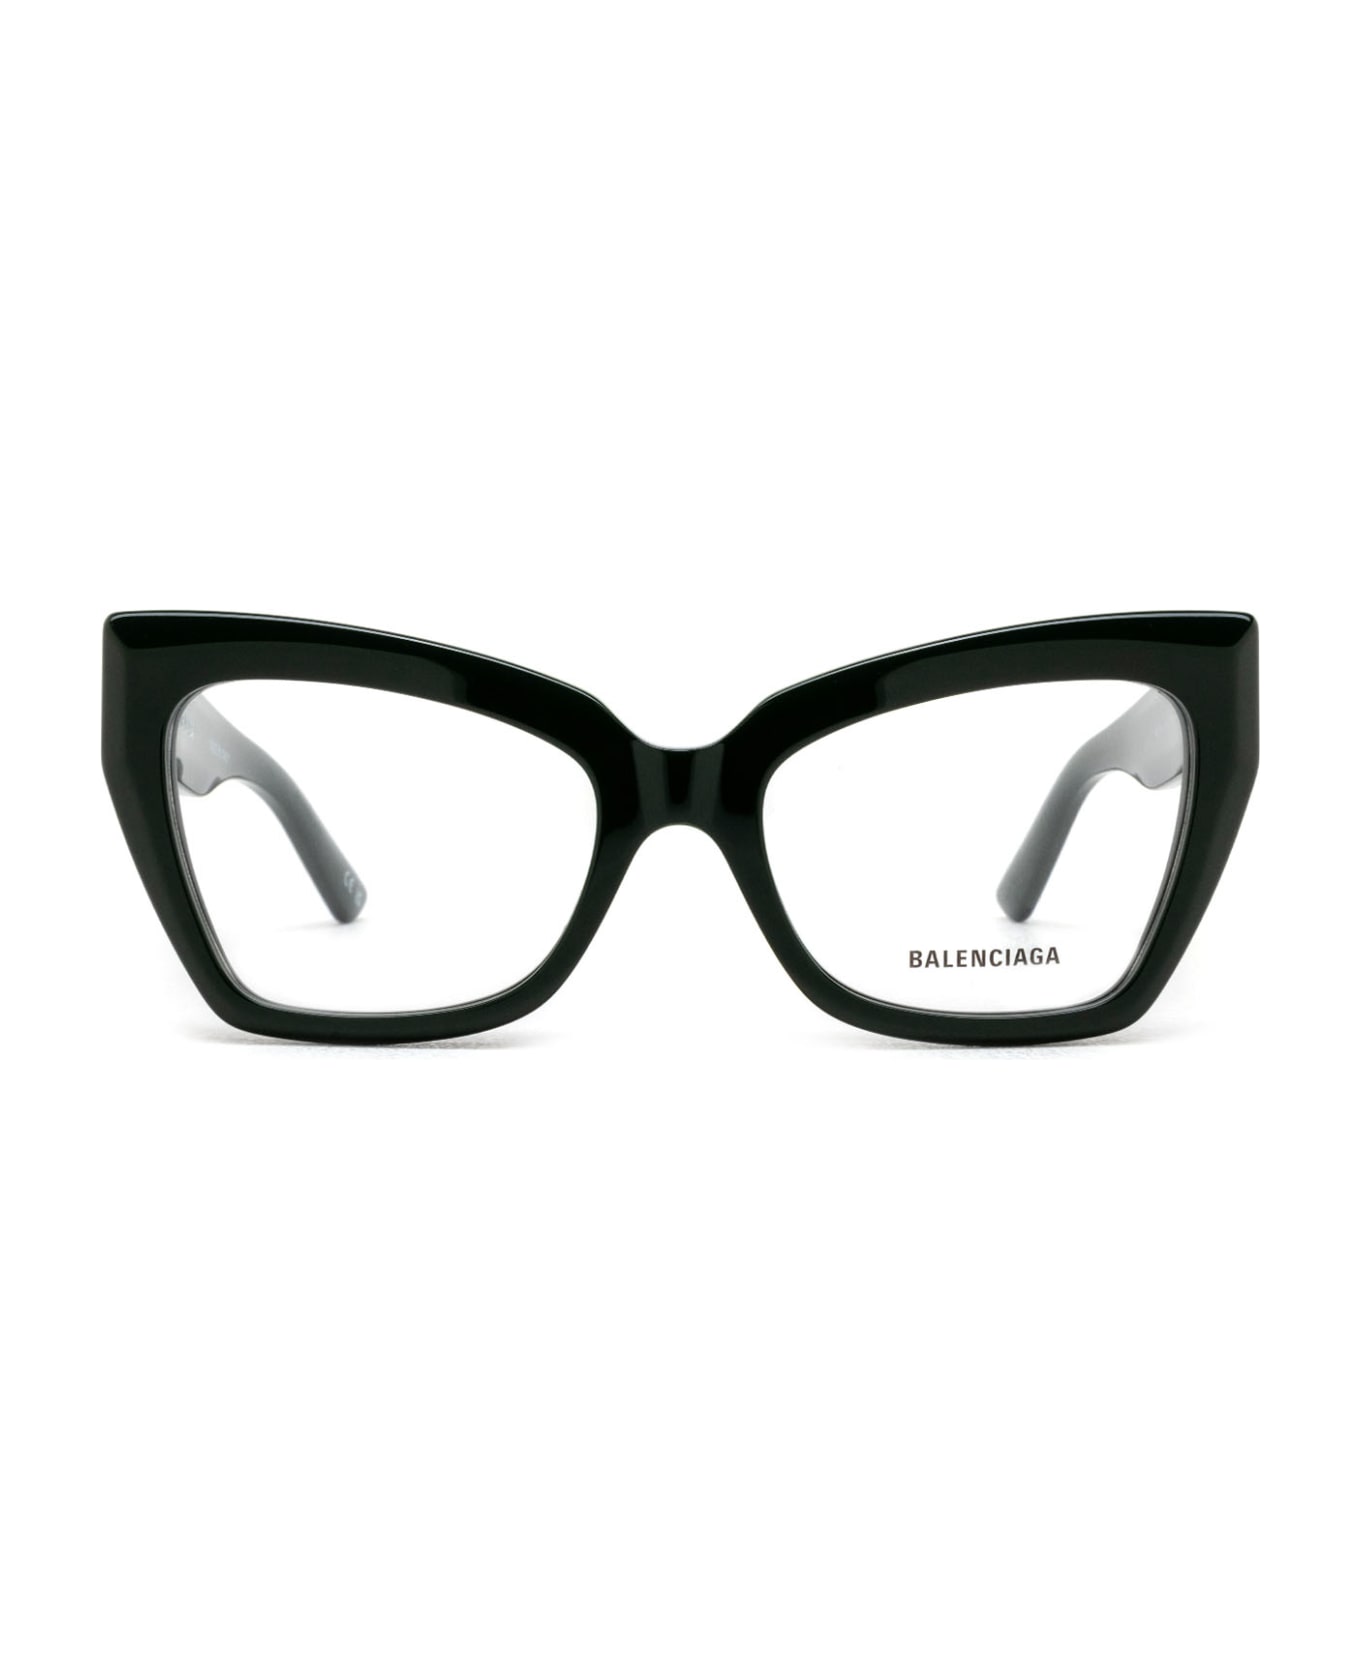 Balenciaga Eyewear Bb0275o Glasses - Green アイウェア